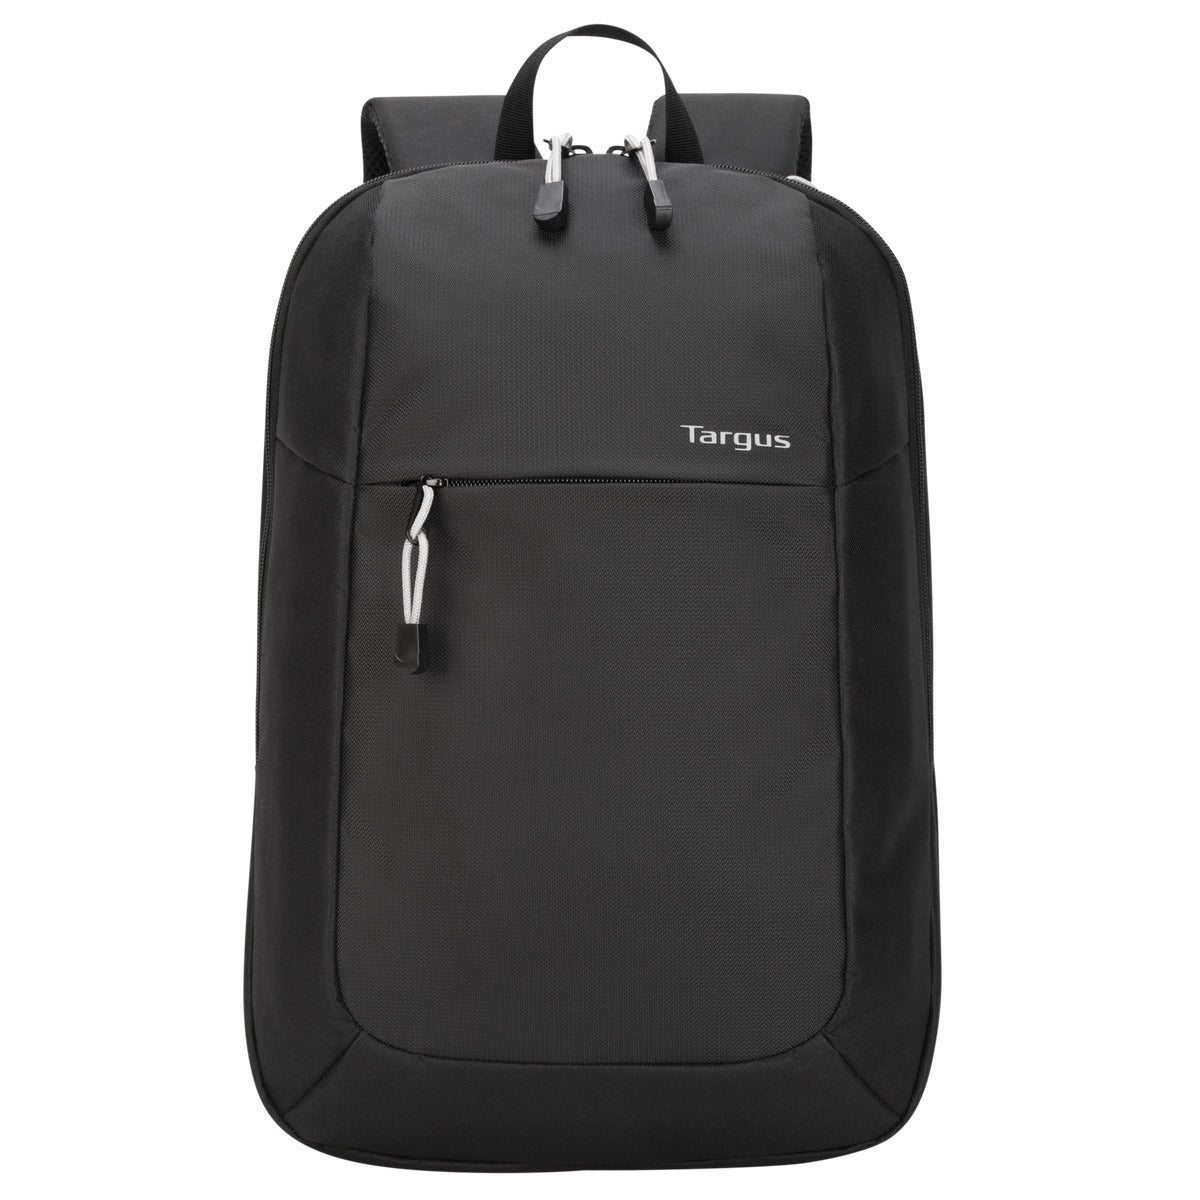 | Backpack (Black) Intellect 15.6-inch Advanced Laptop Targus